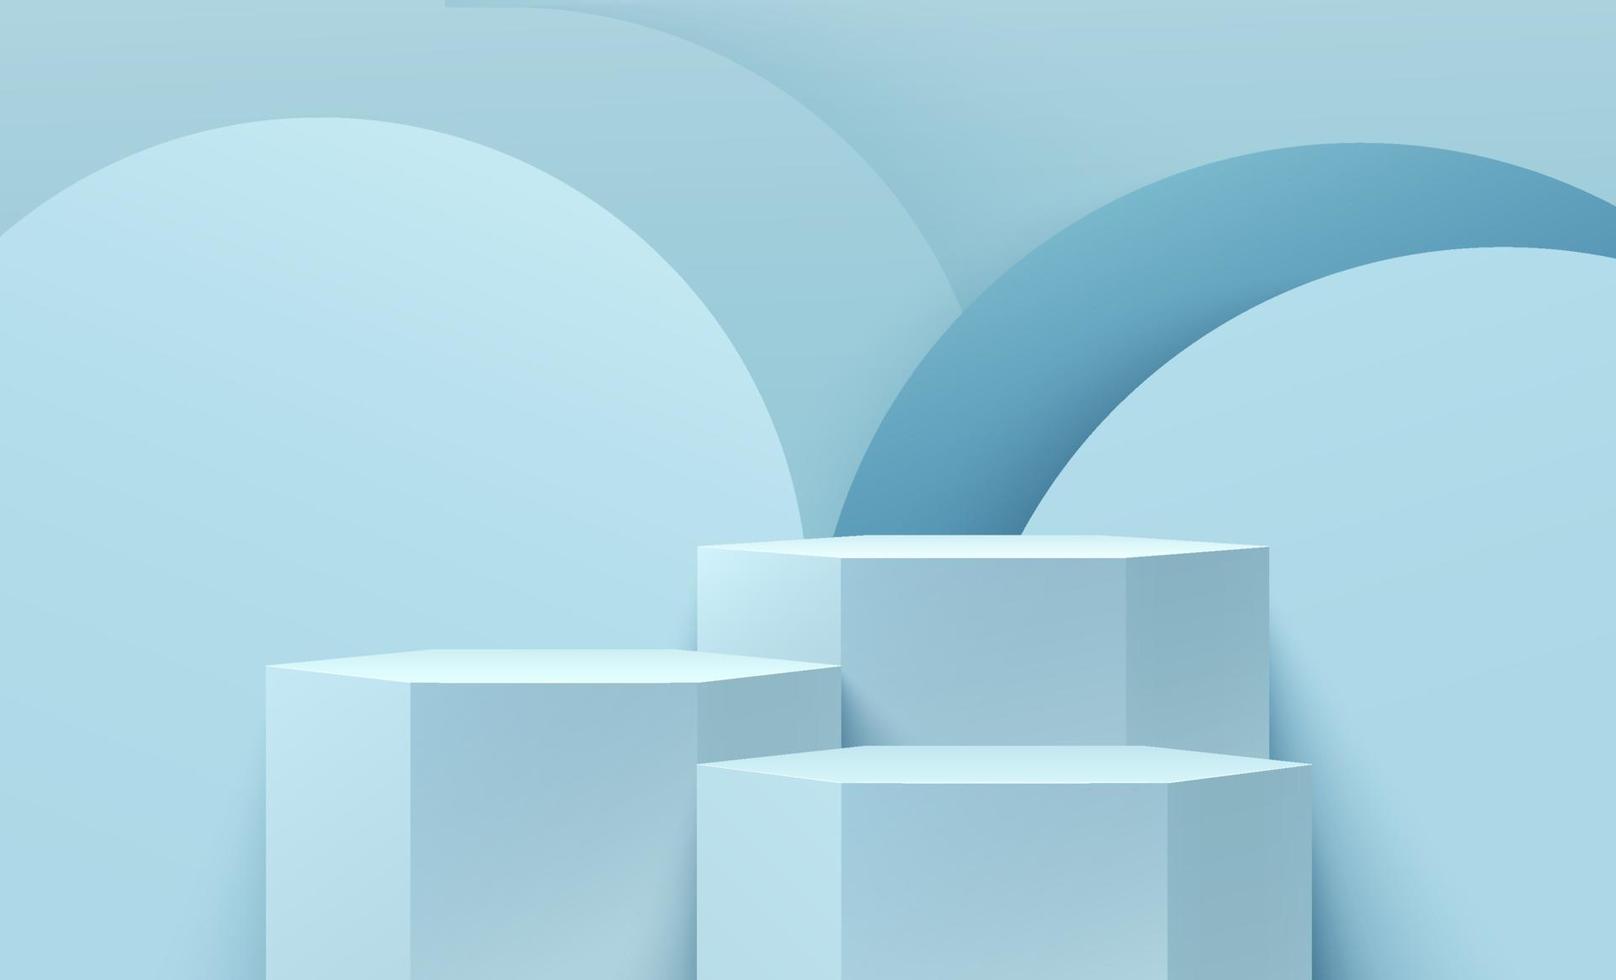 Pantalla hexagonal abstracta para producto en sitio web en diseño moderno. representación de fondo con podio y escena de pared de textura de círculo azul claro mínimo, diseño de forma geométrica de representación 3D. ilustración vectorial vector